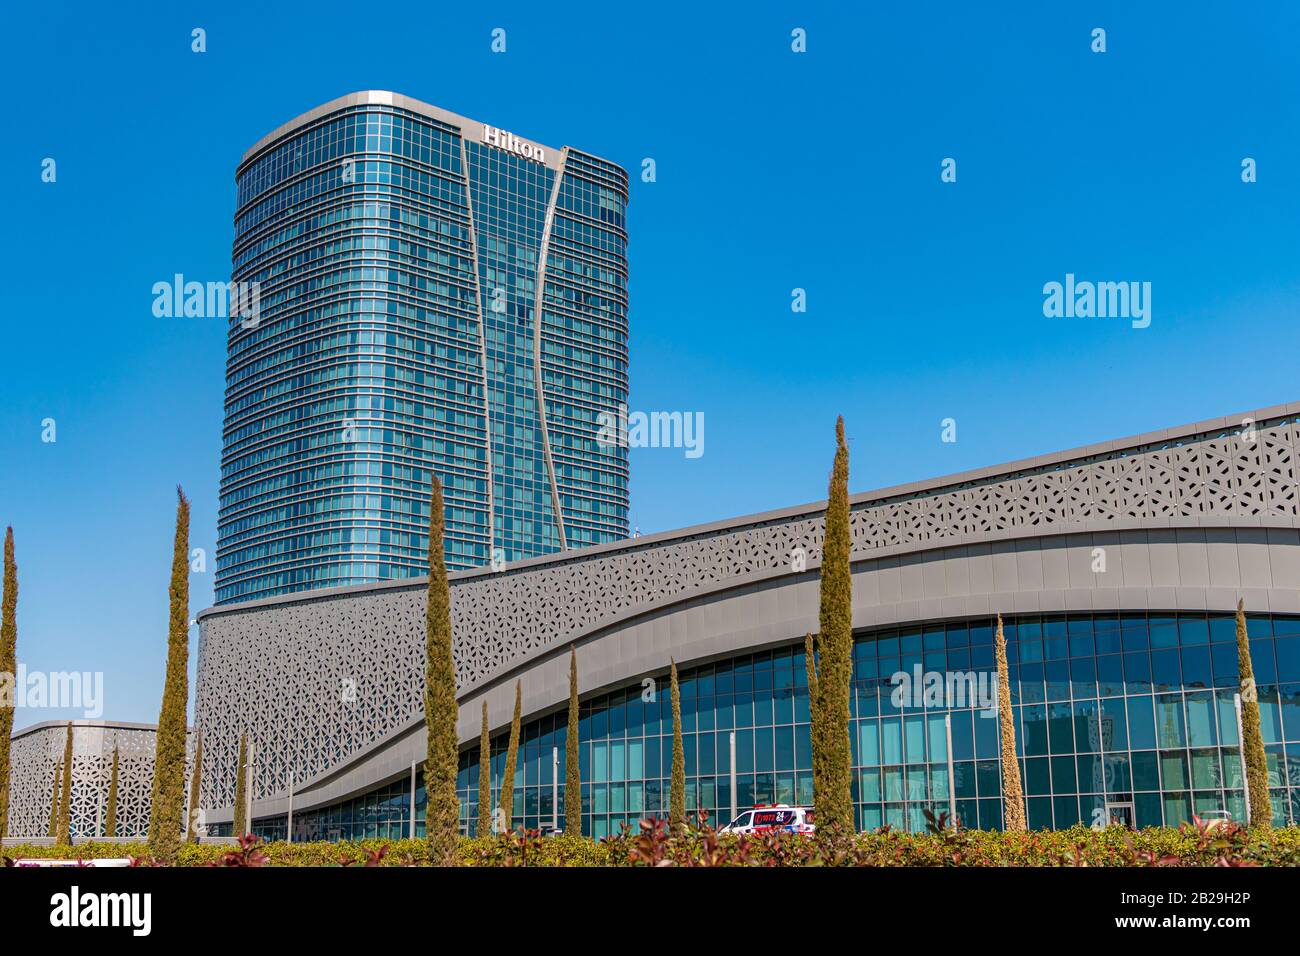 Tashkent, Uzbekistan - March 01, 2020: New Hilton hotel building in Uzbekistan capital - Tashkent, medium shot Stock Photo